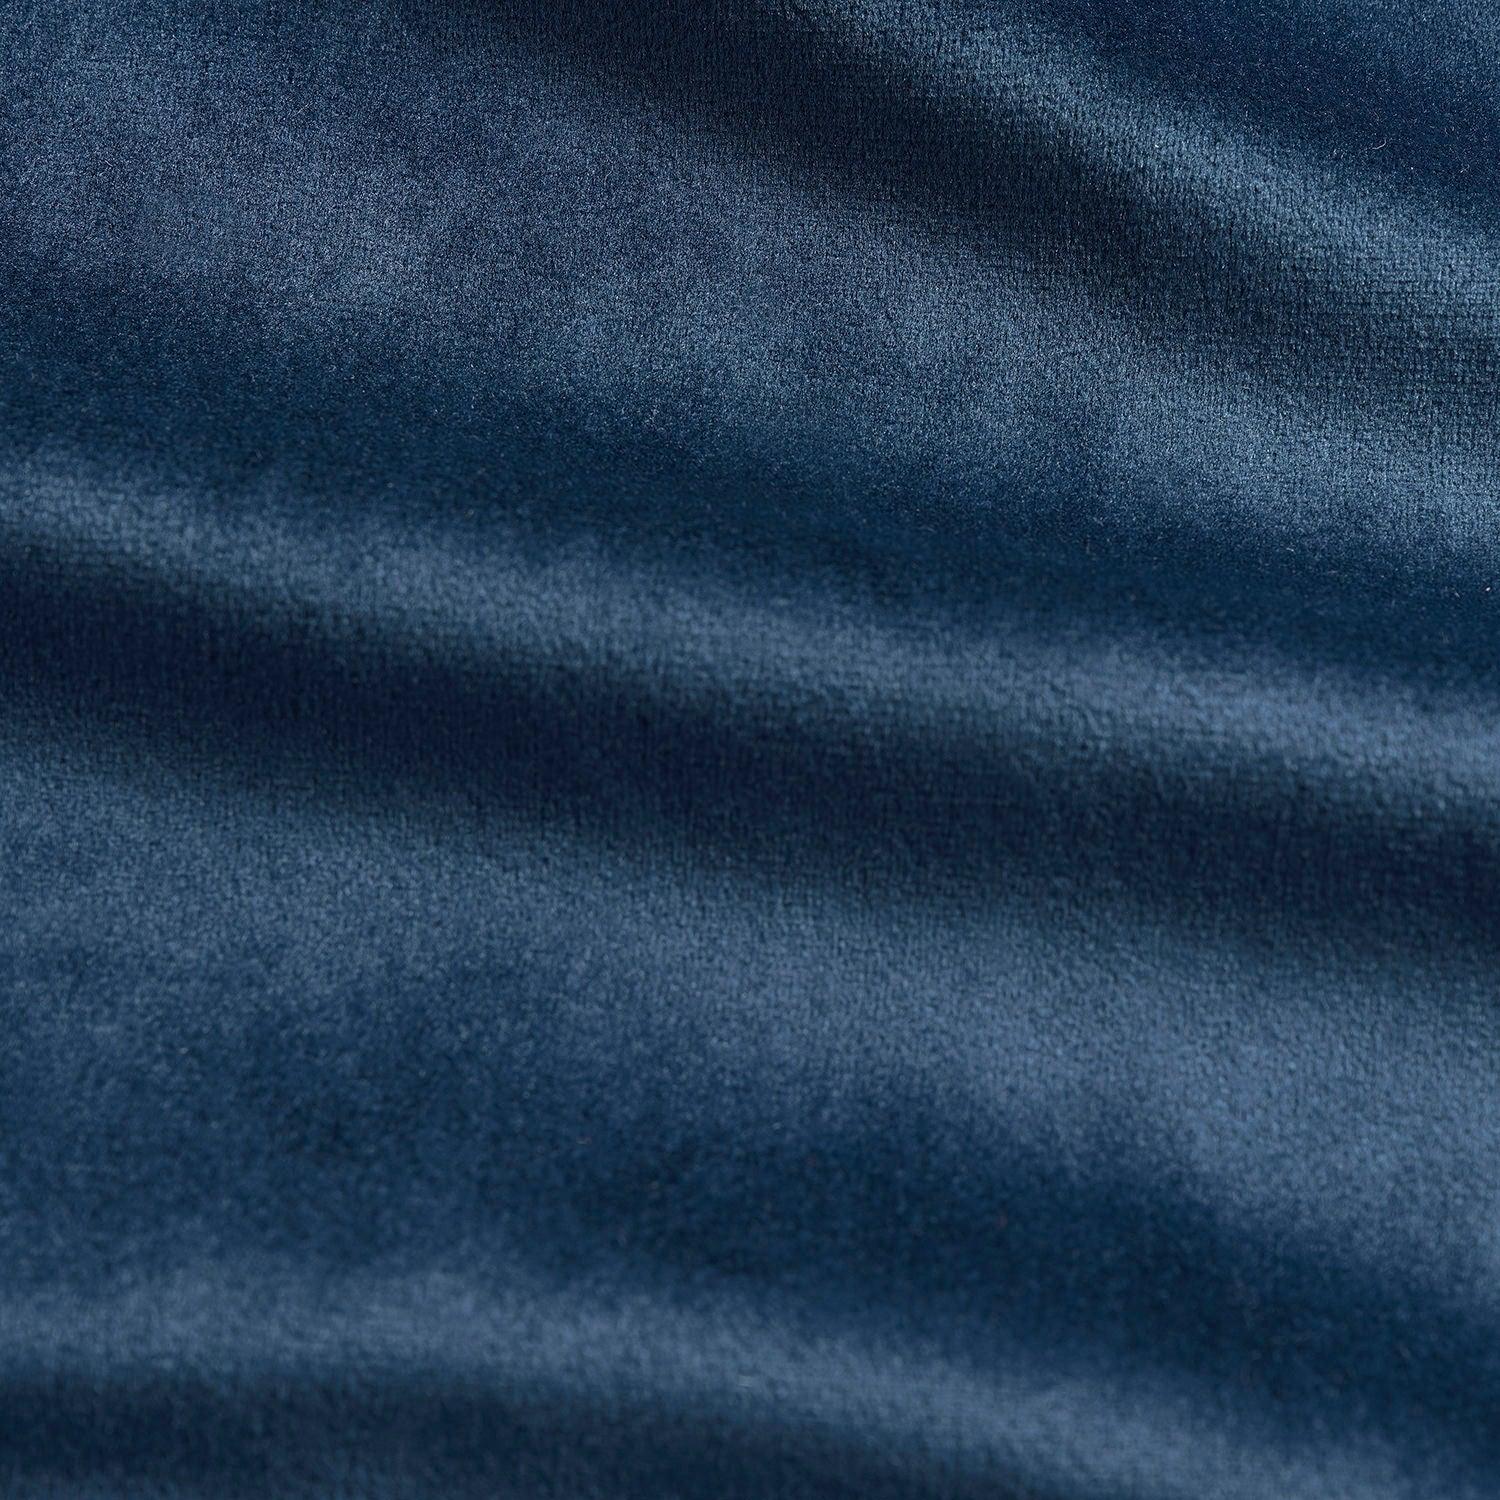 Deep Cobalt Blue Simply Velvet Room Darkening Curtain Pair (2 Panels)